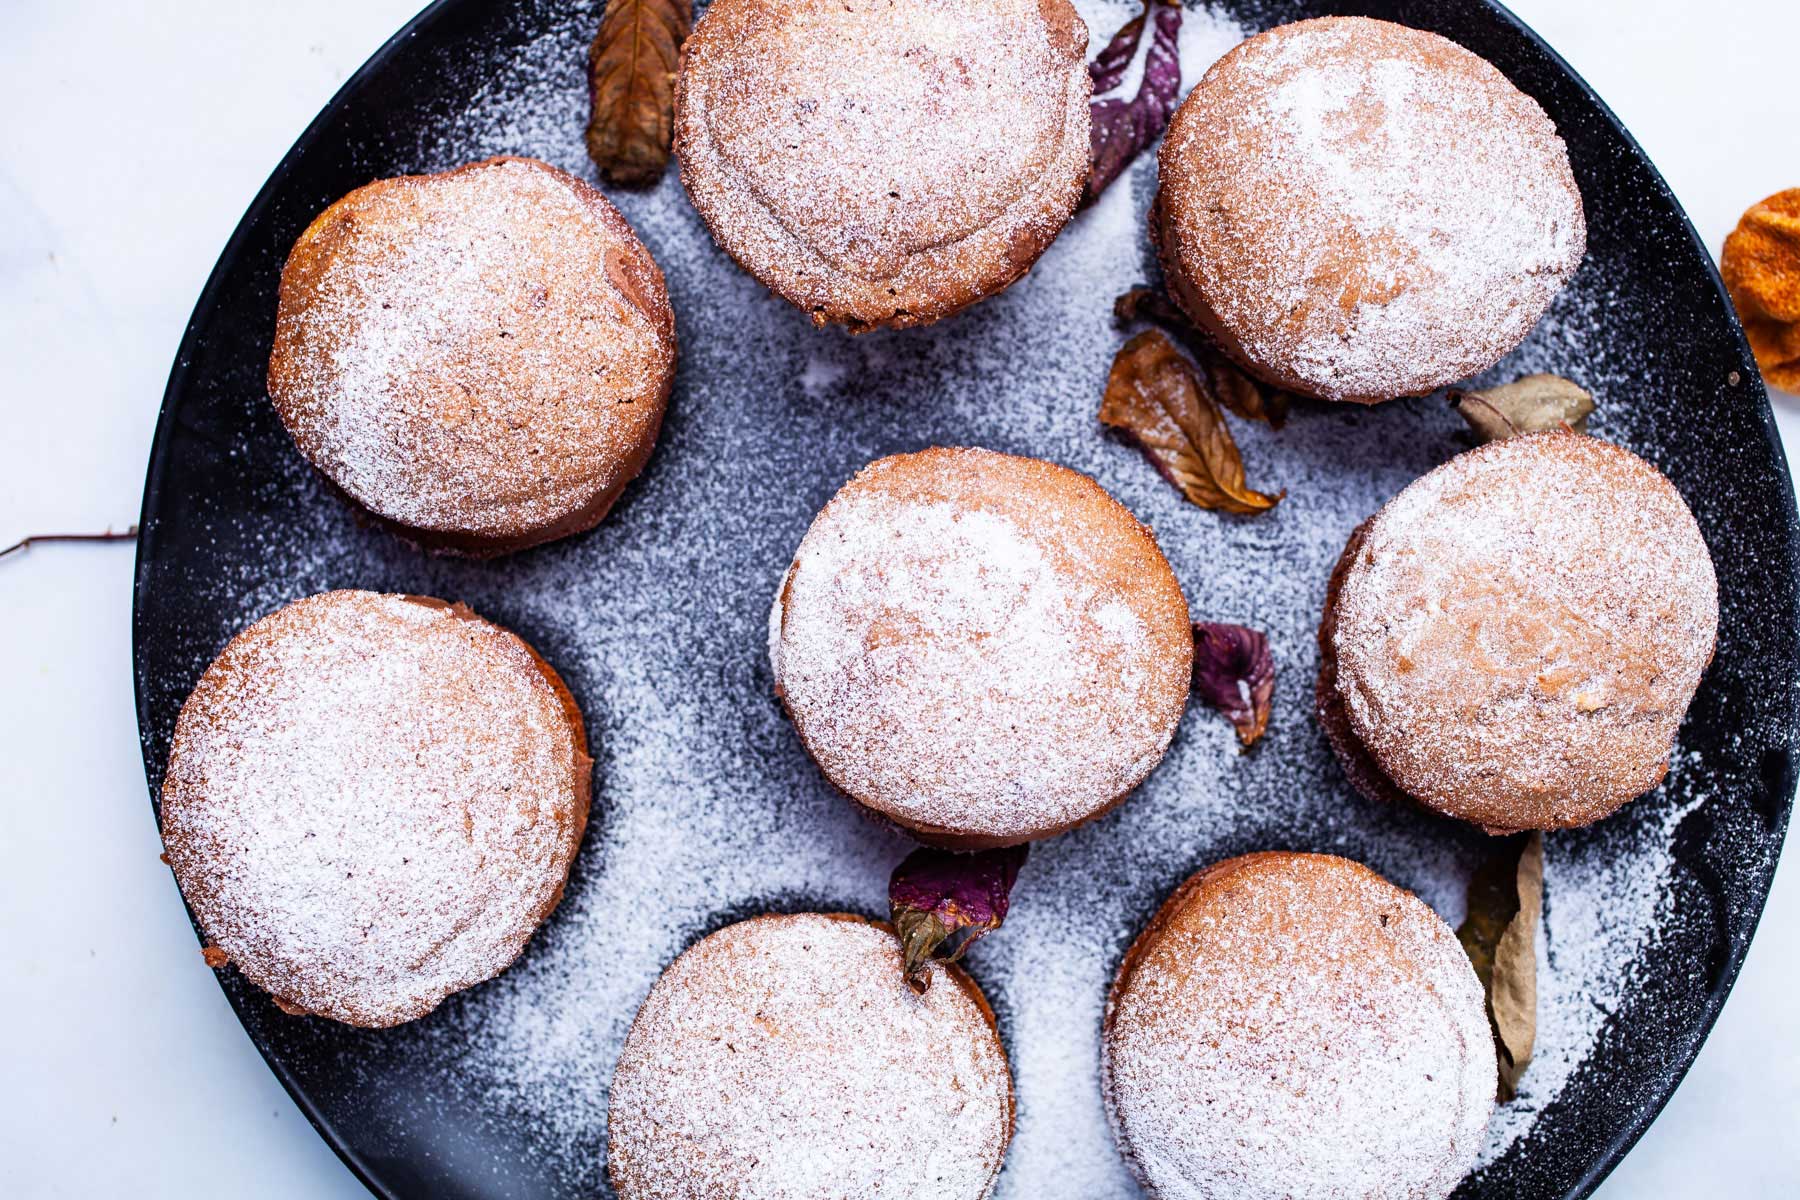 Sugar-dusted mascarpone cookies on a festive plate.